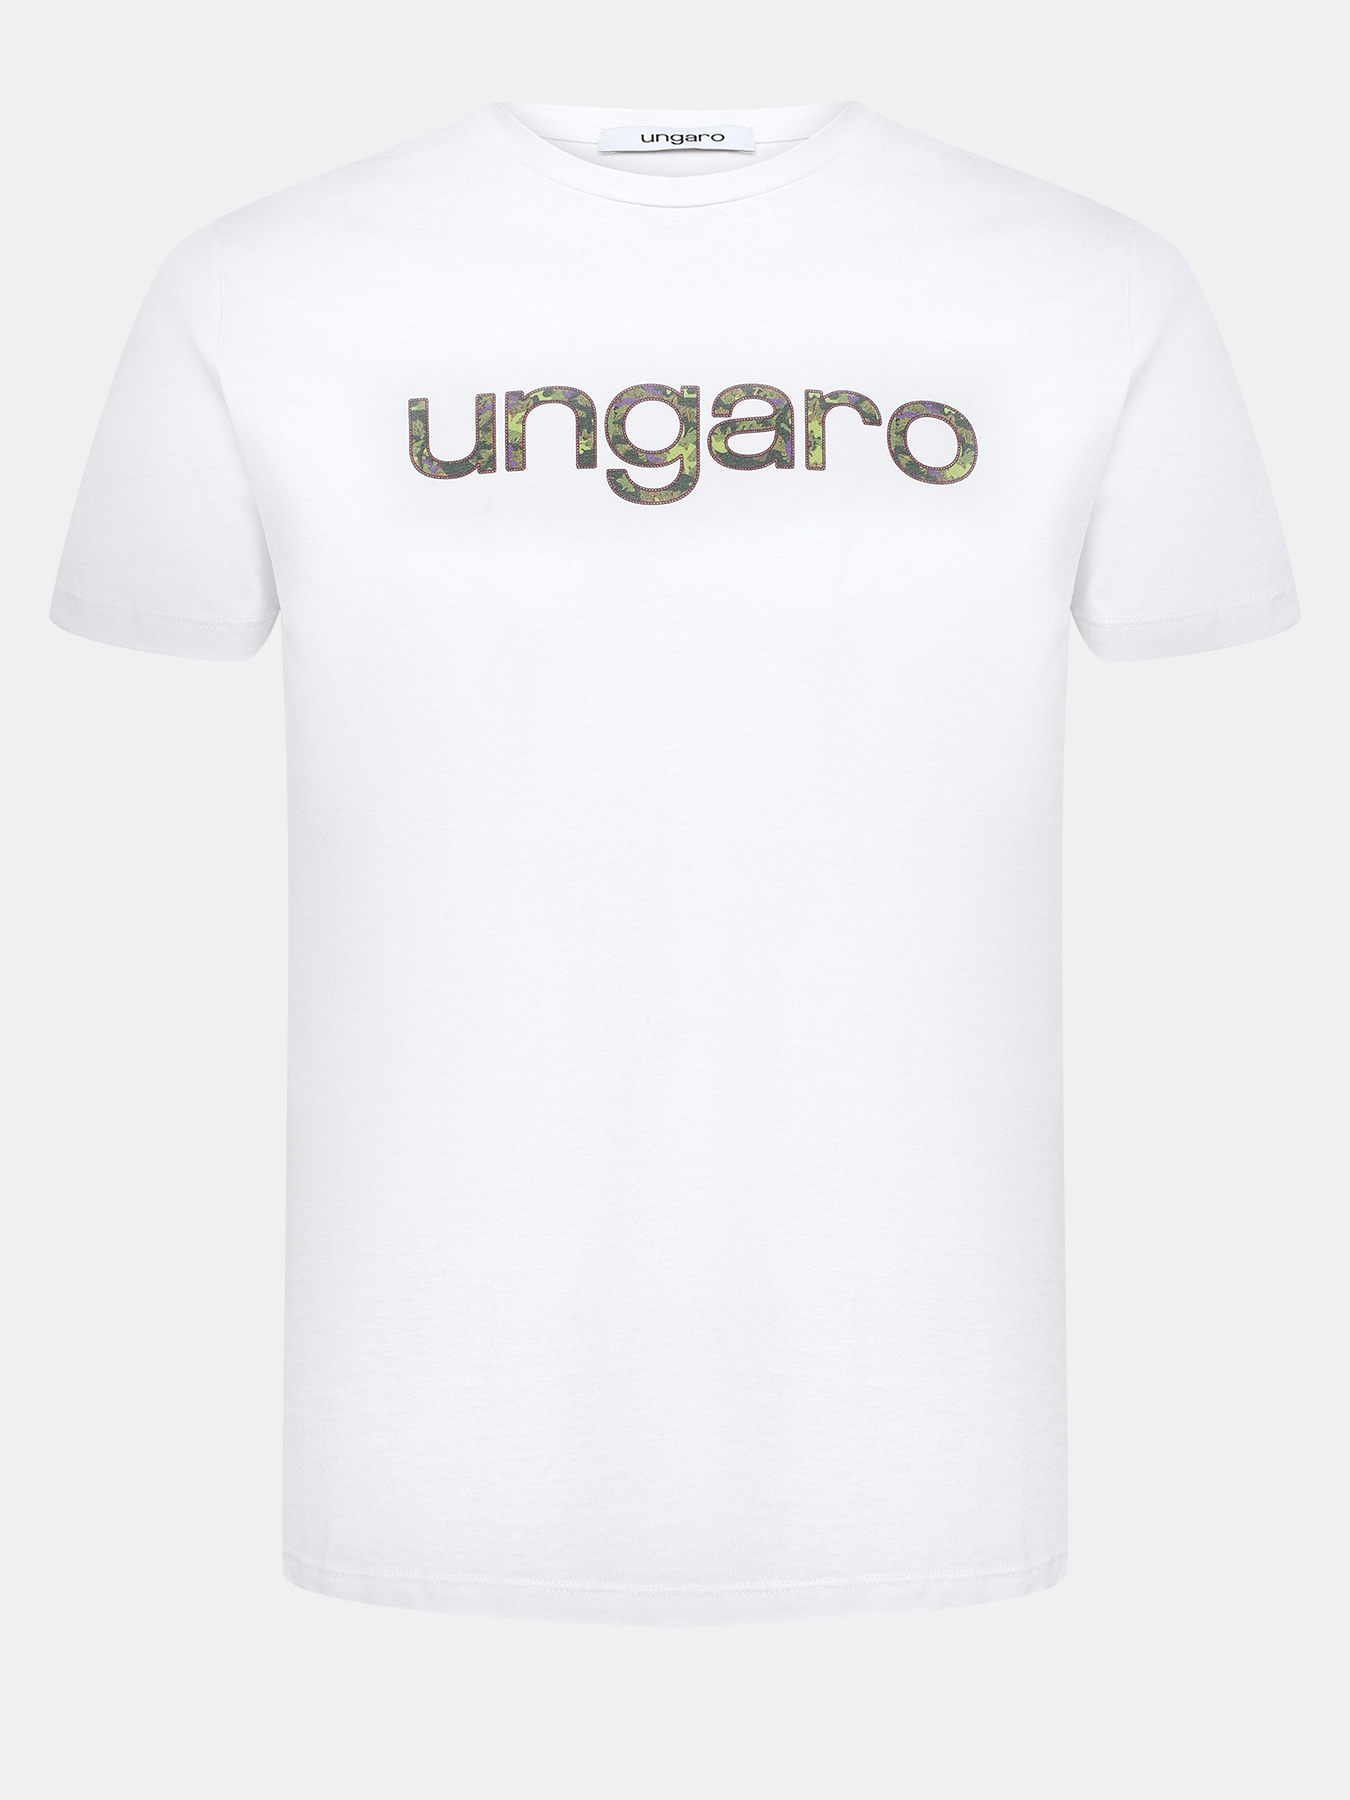 Футболка Ungaro 412765-287, цвет белый, размер 56-58